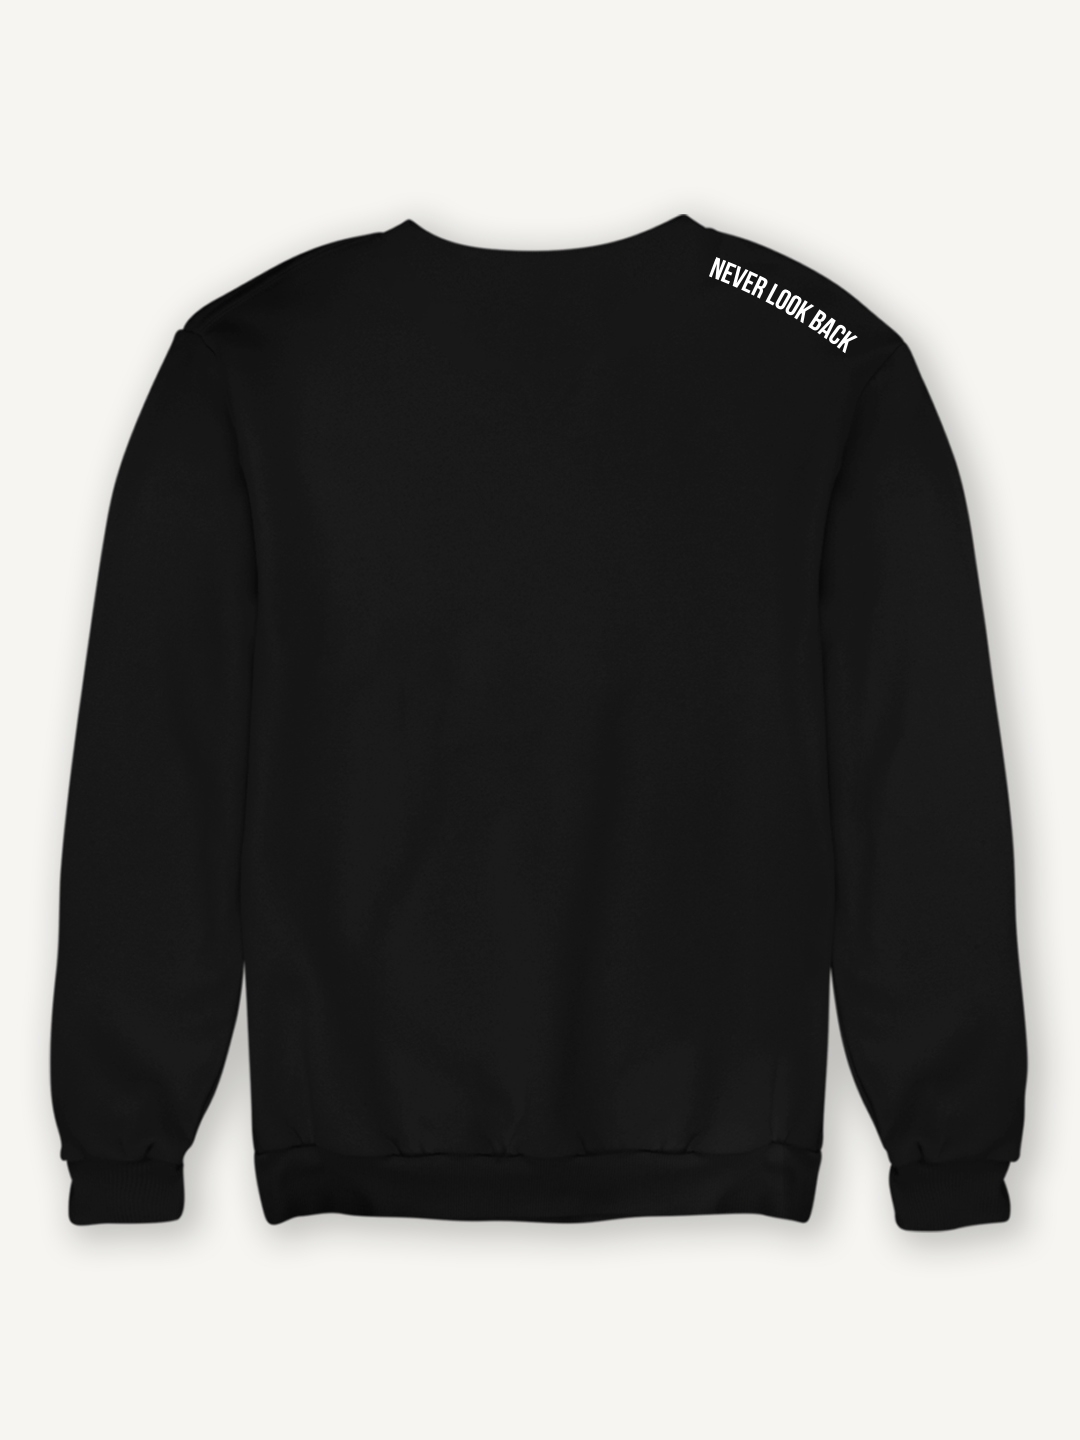 creativeideas.store | Never Look Back Black Sweatshirt